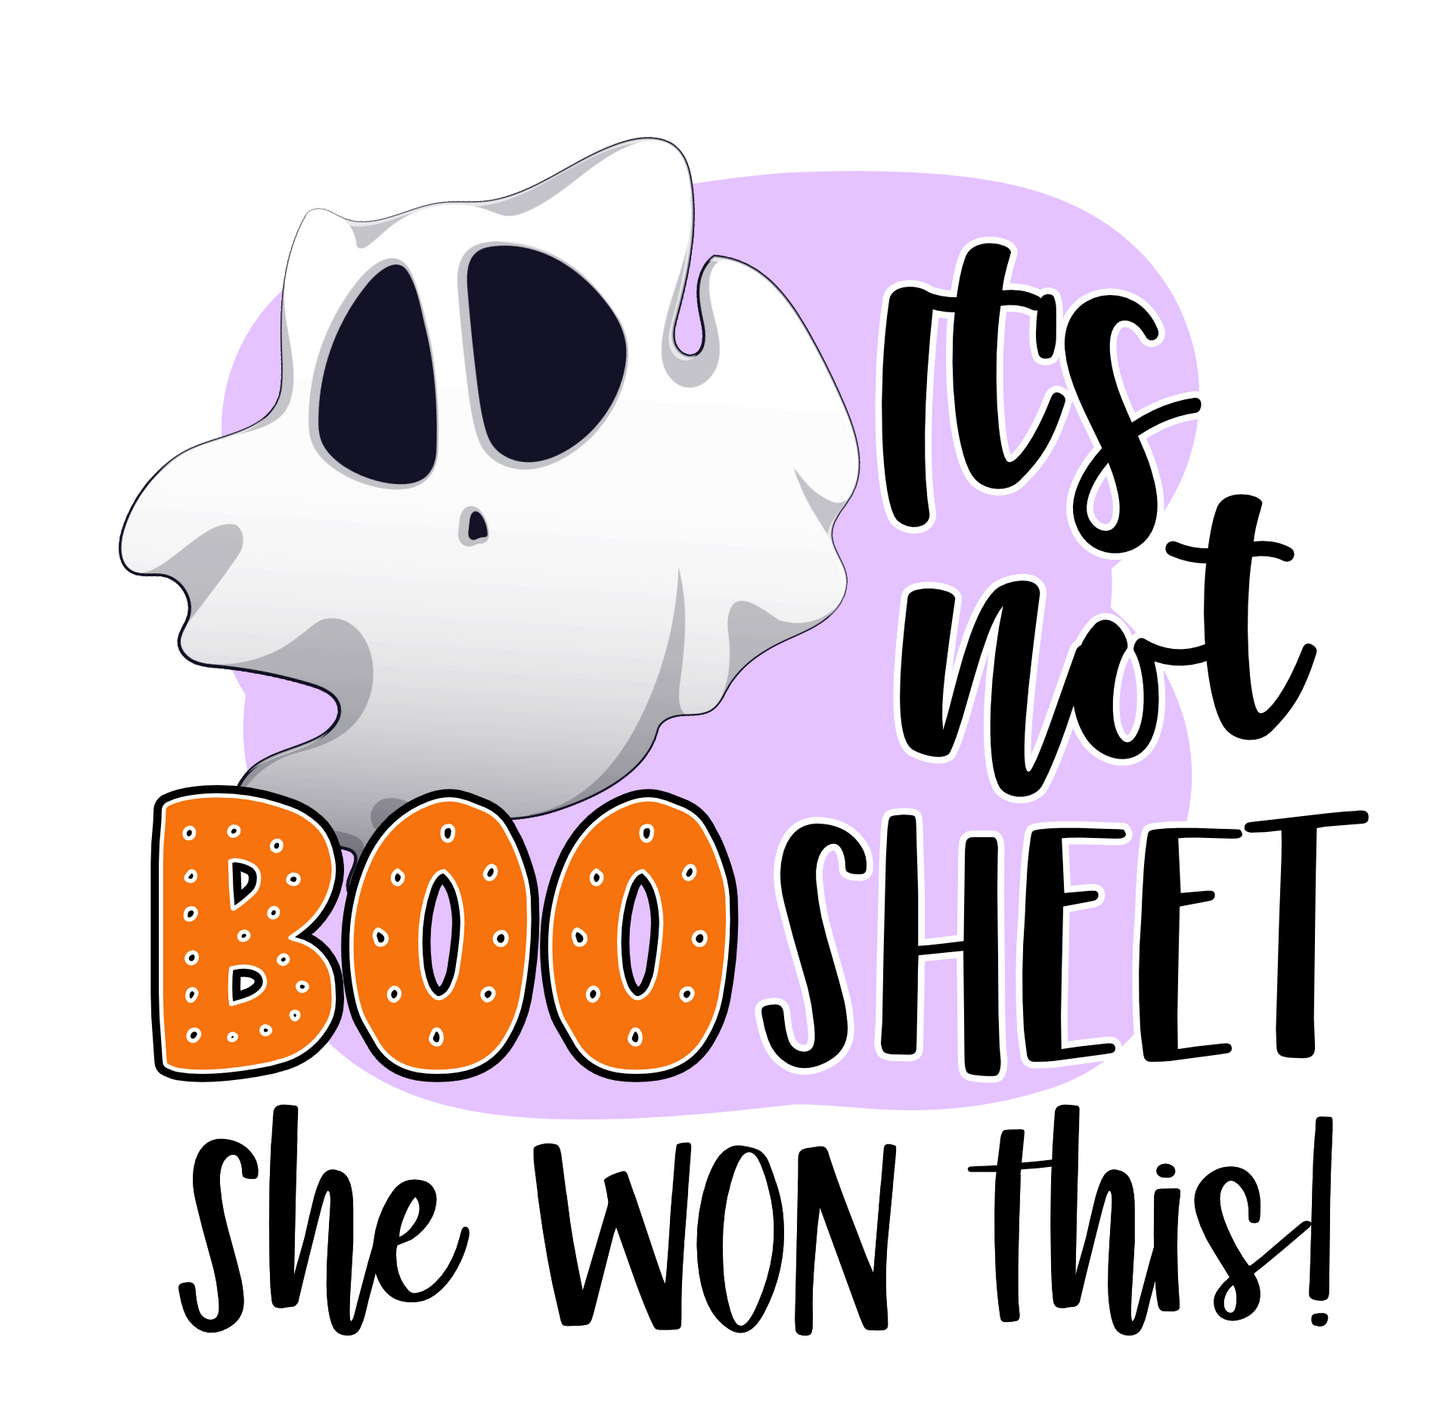 Boo Sheet she won stickers